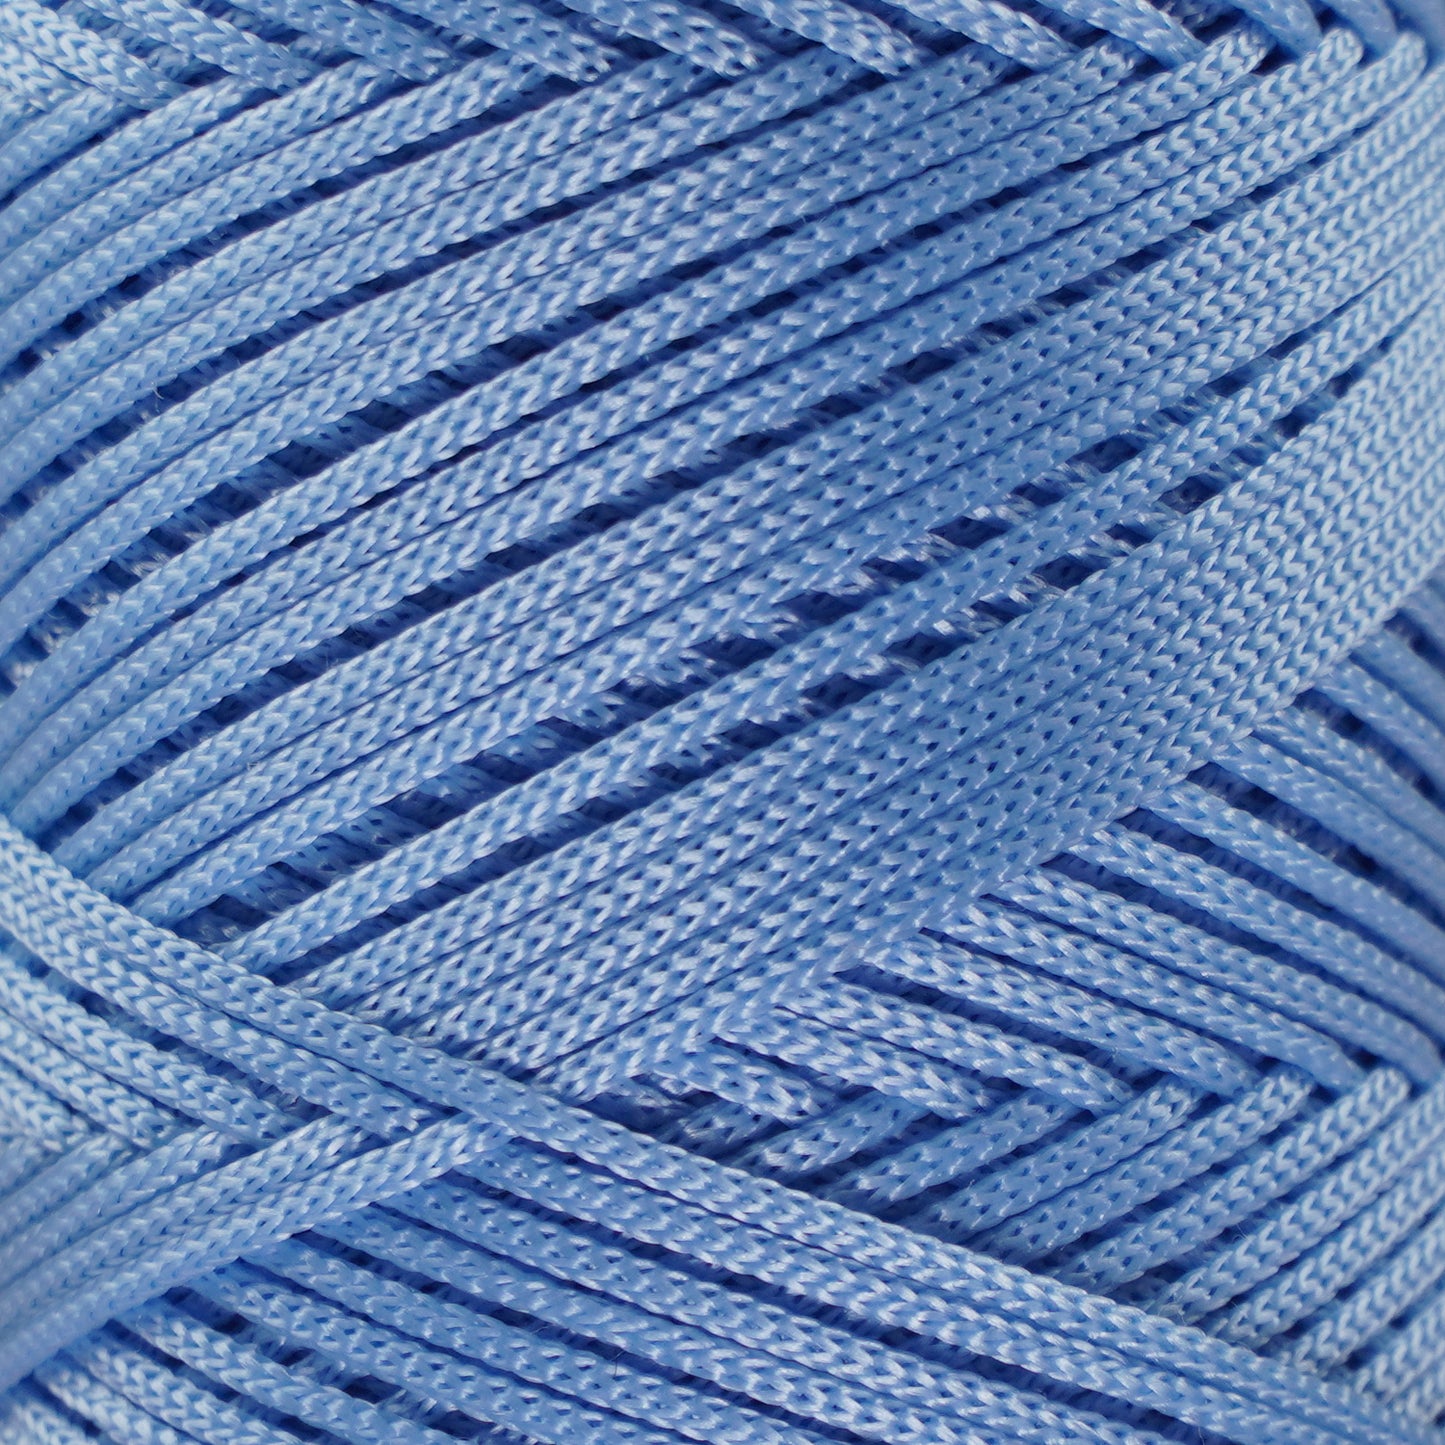 Polyester Macrame Cord 2mm x 250 yards (750 feet)  - Baby Blue